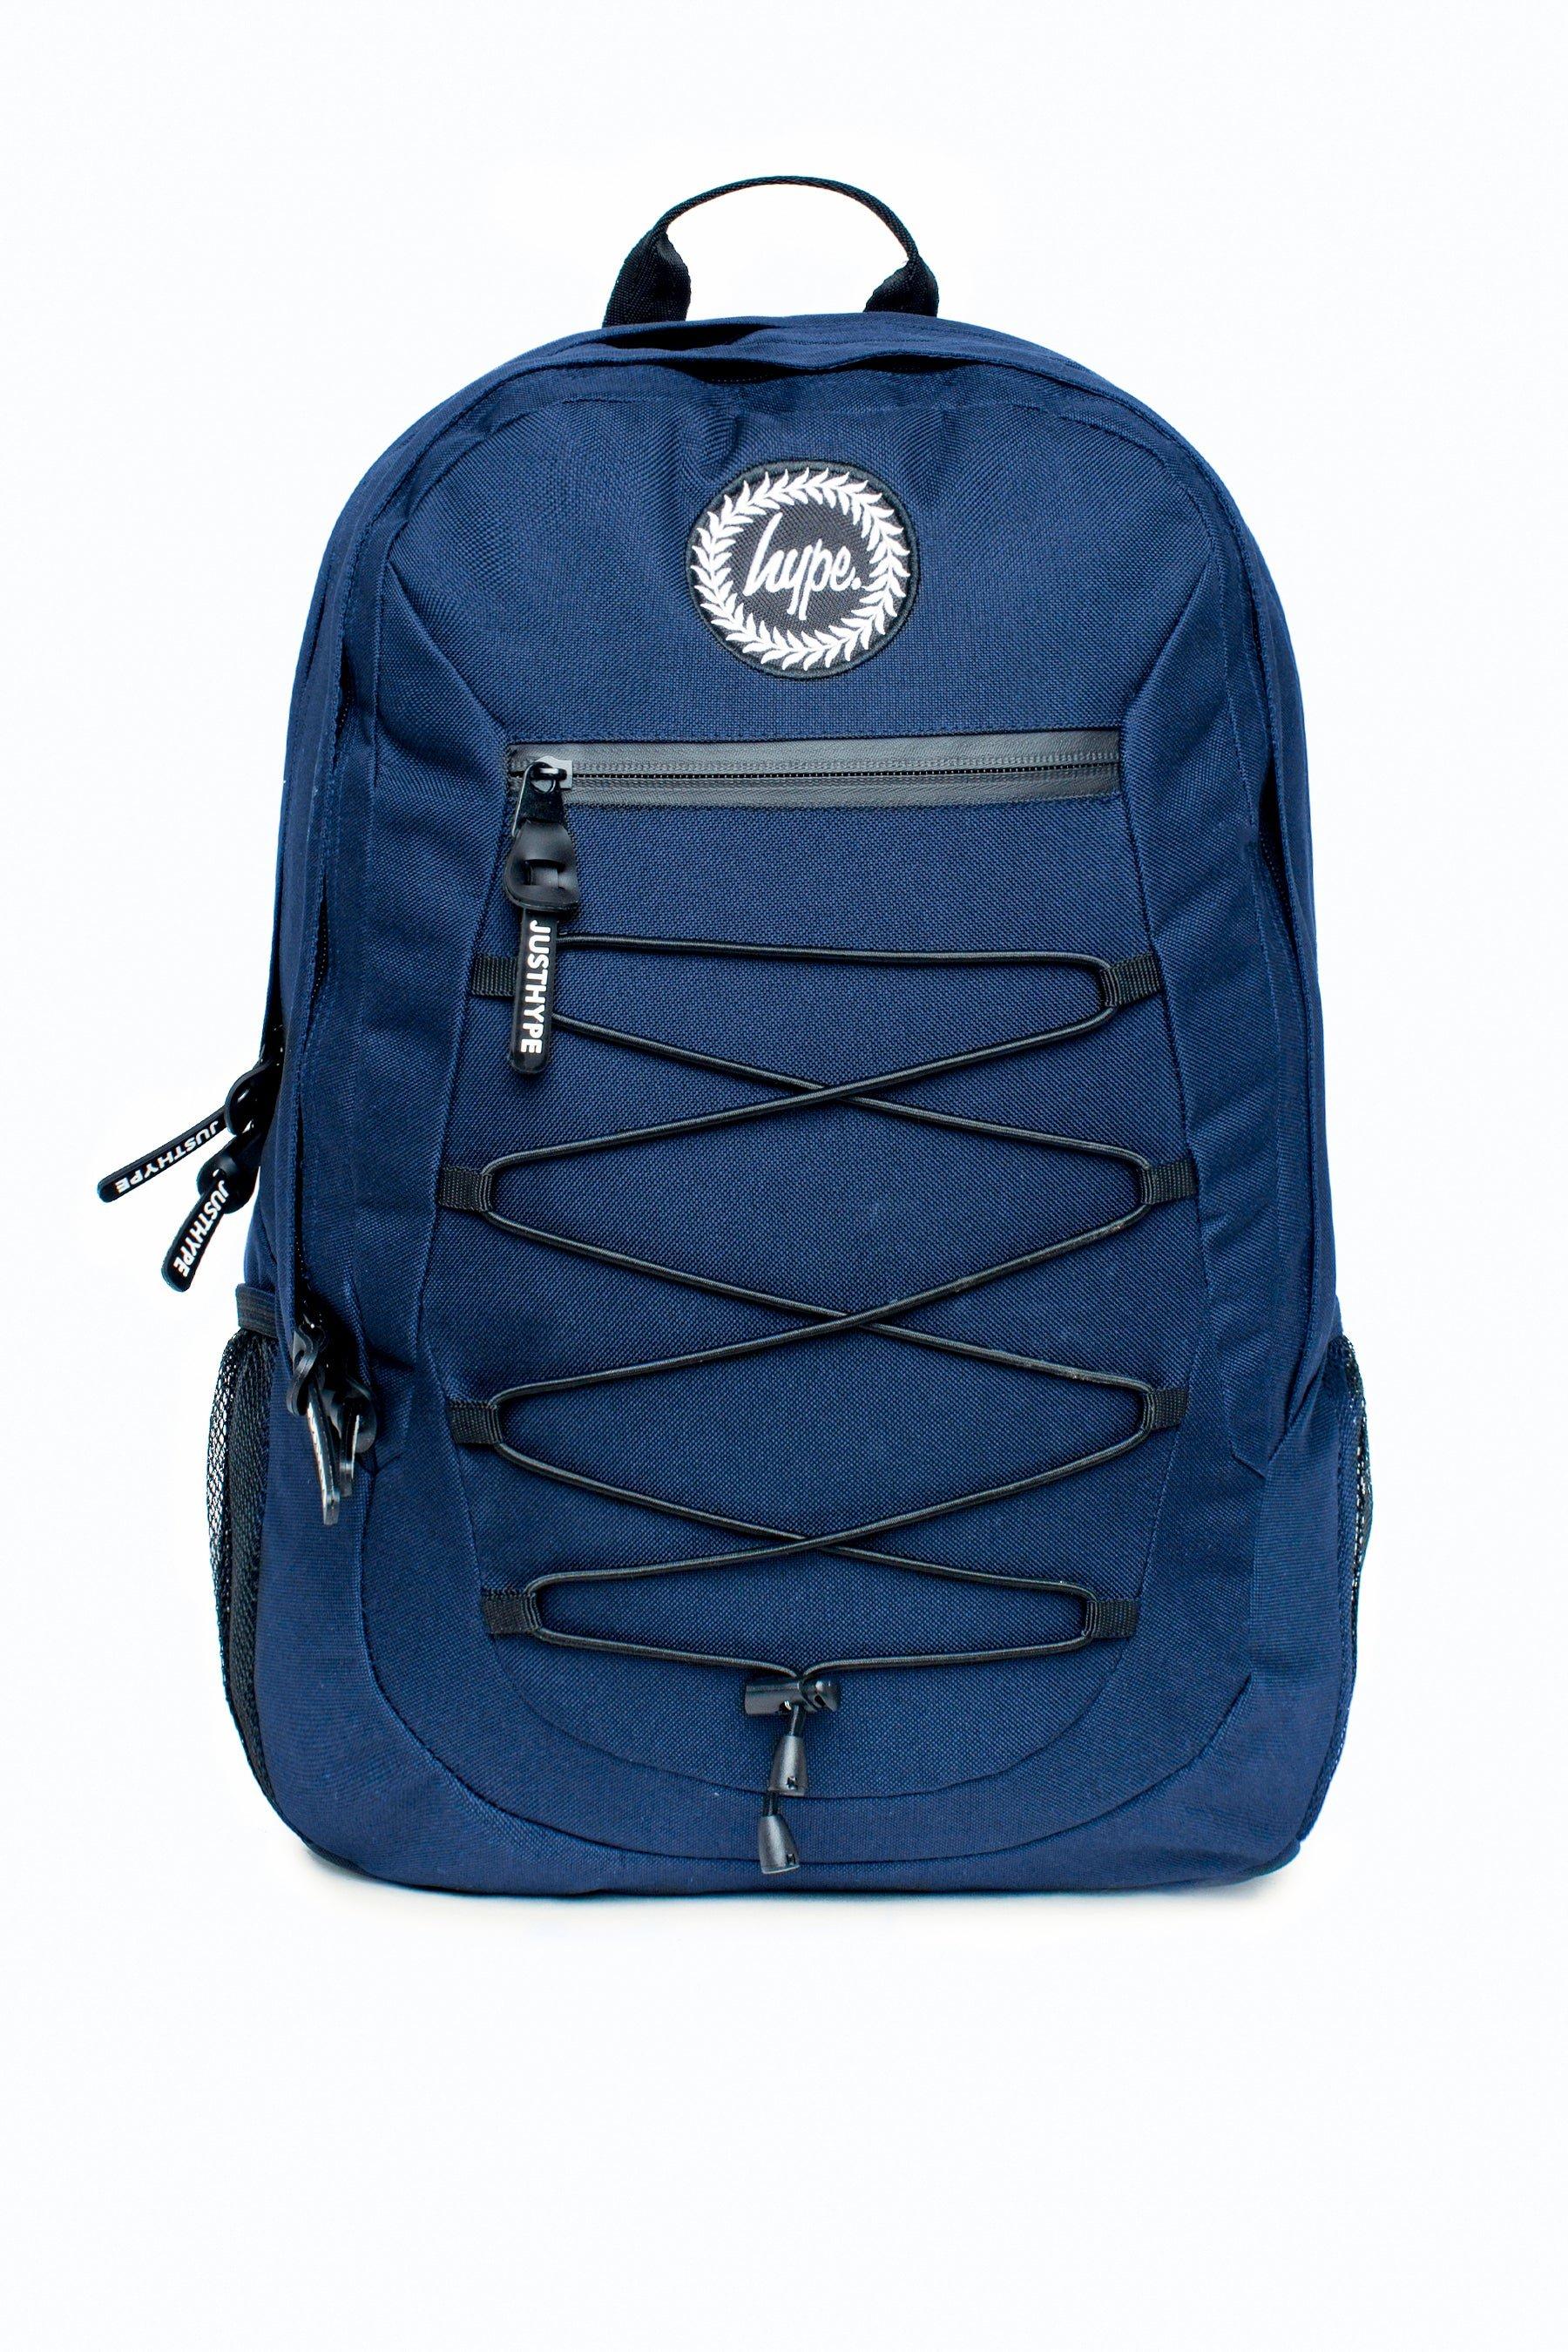 Рюкзак Crest Maxi Hype, темно-синий рюкзак hype синий